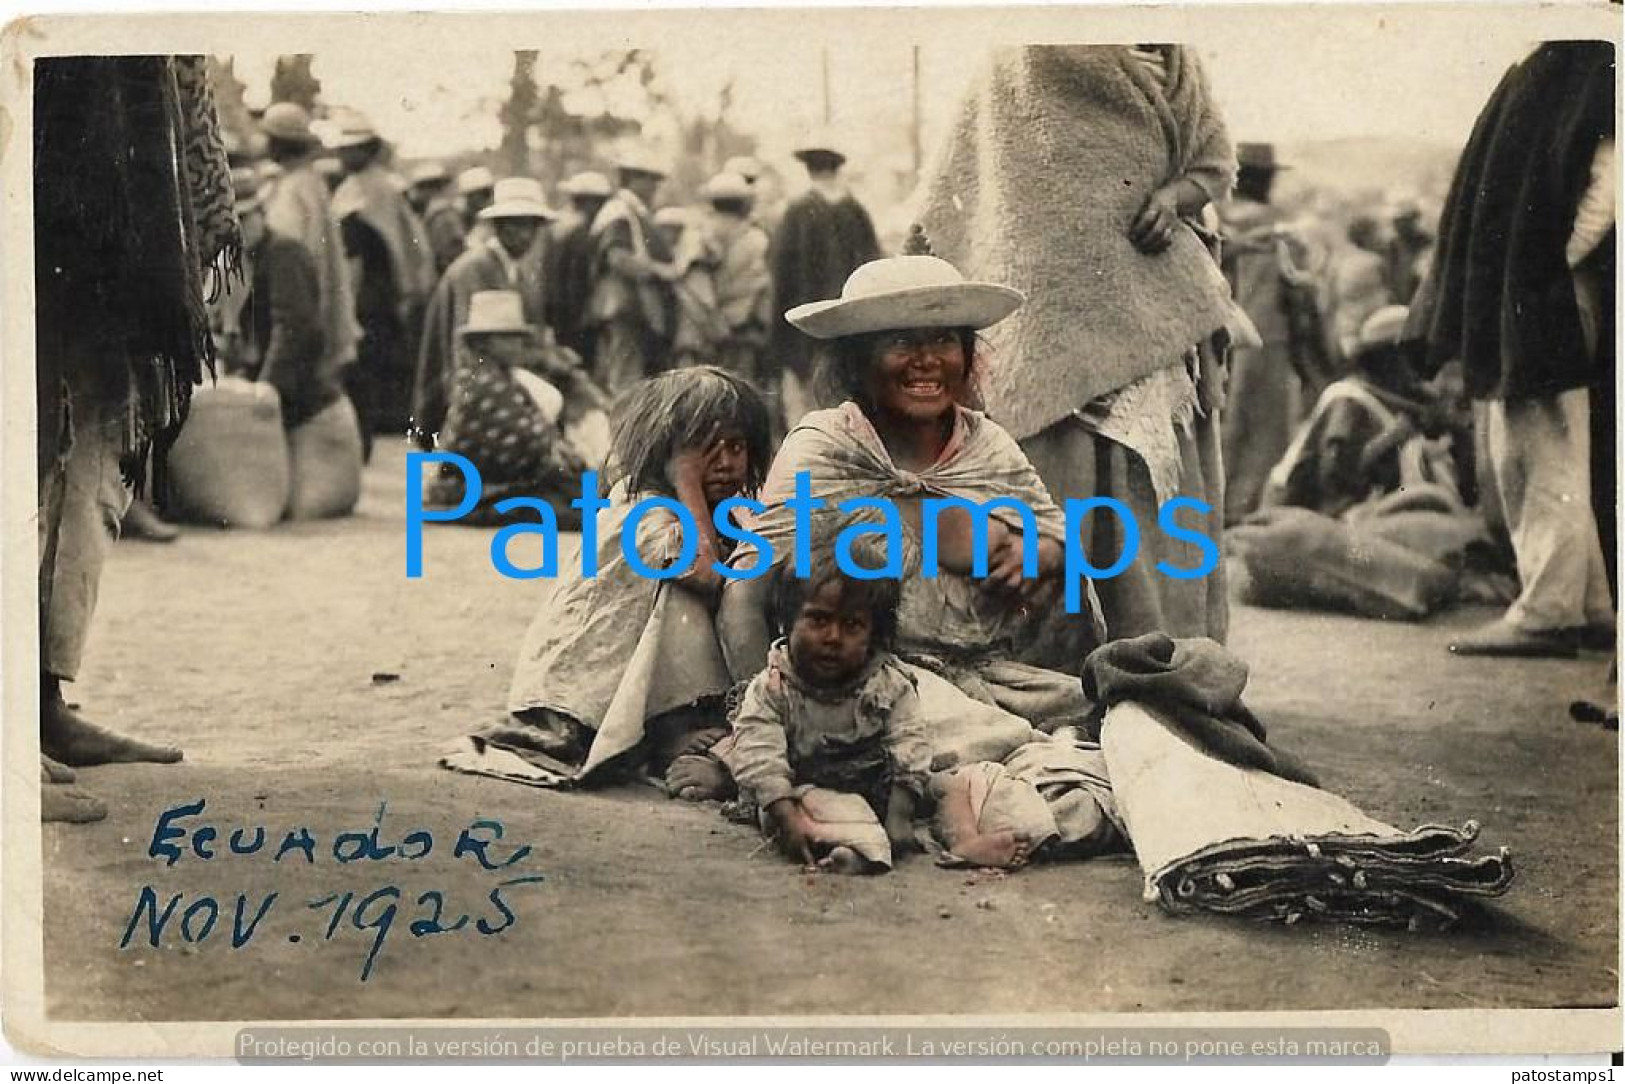 224769 EQUATOR COSTUMES NATIVE WOMAN AND CHILDREN YEAR 1925 POSTAL POSTCARD - Ecuador